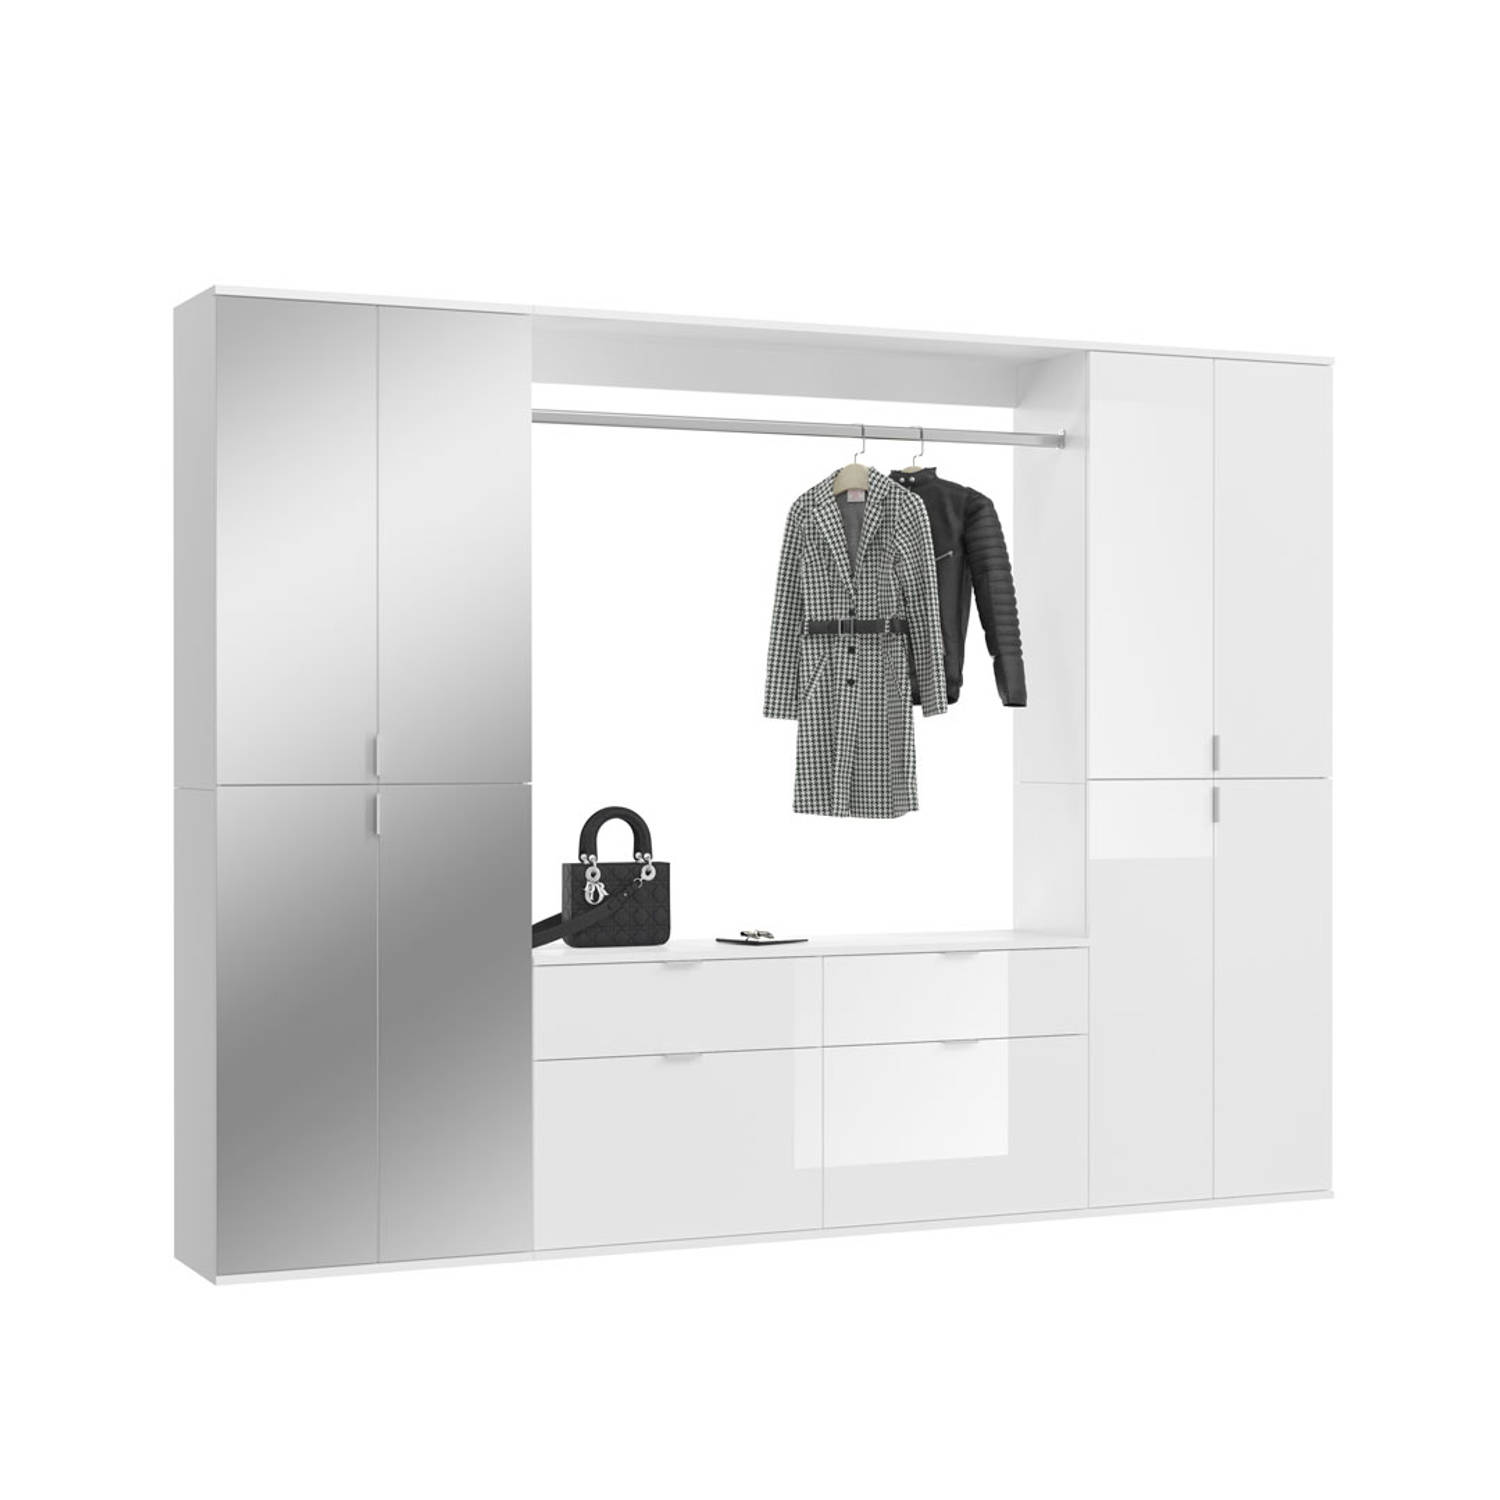 ProjektX garderobe opstelling 10 deuren, 2 laden wit.